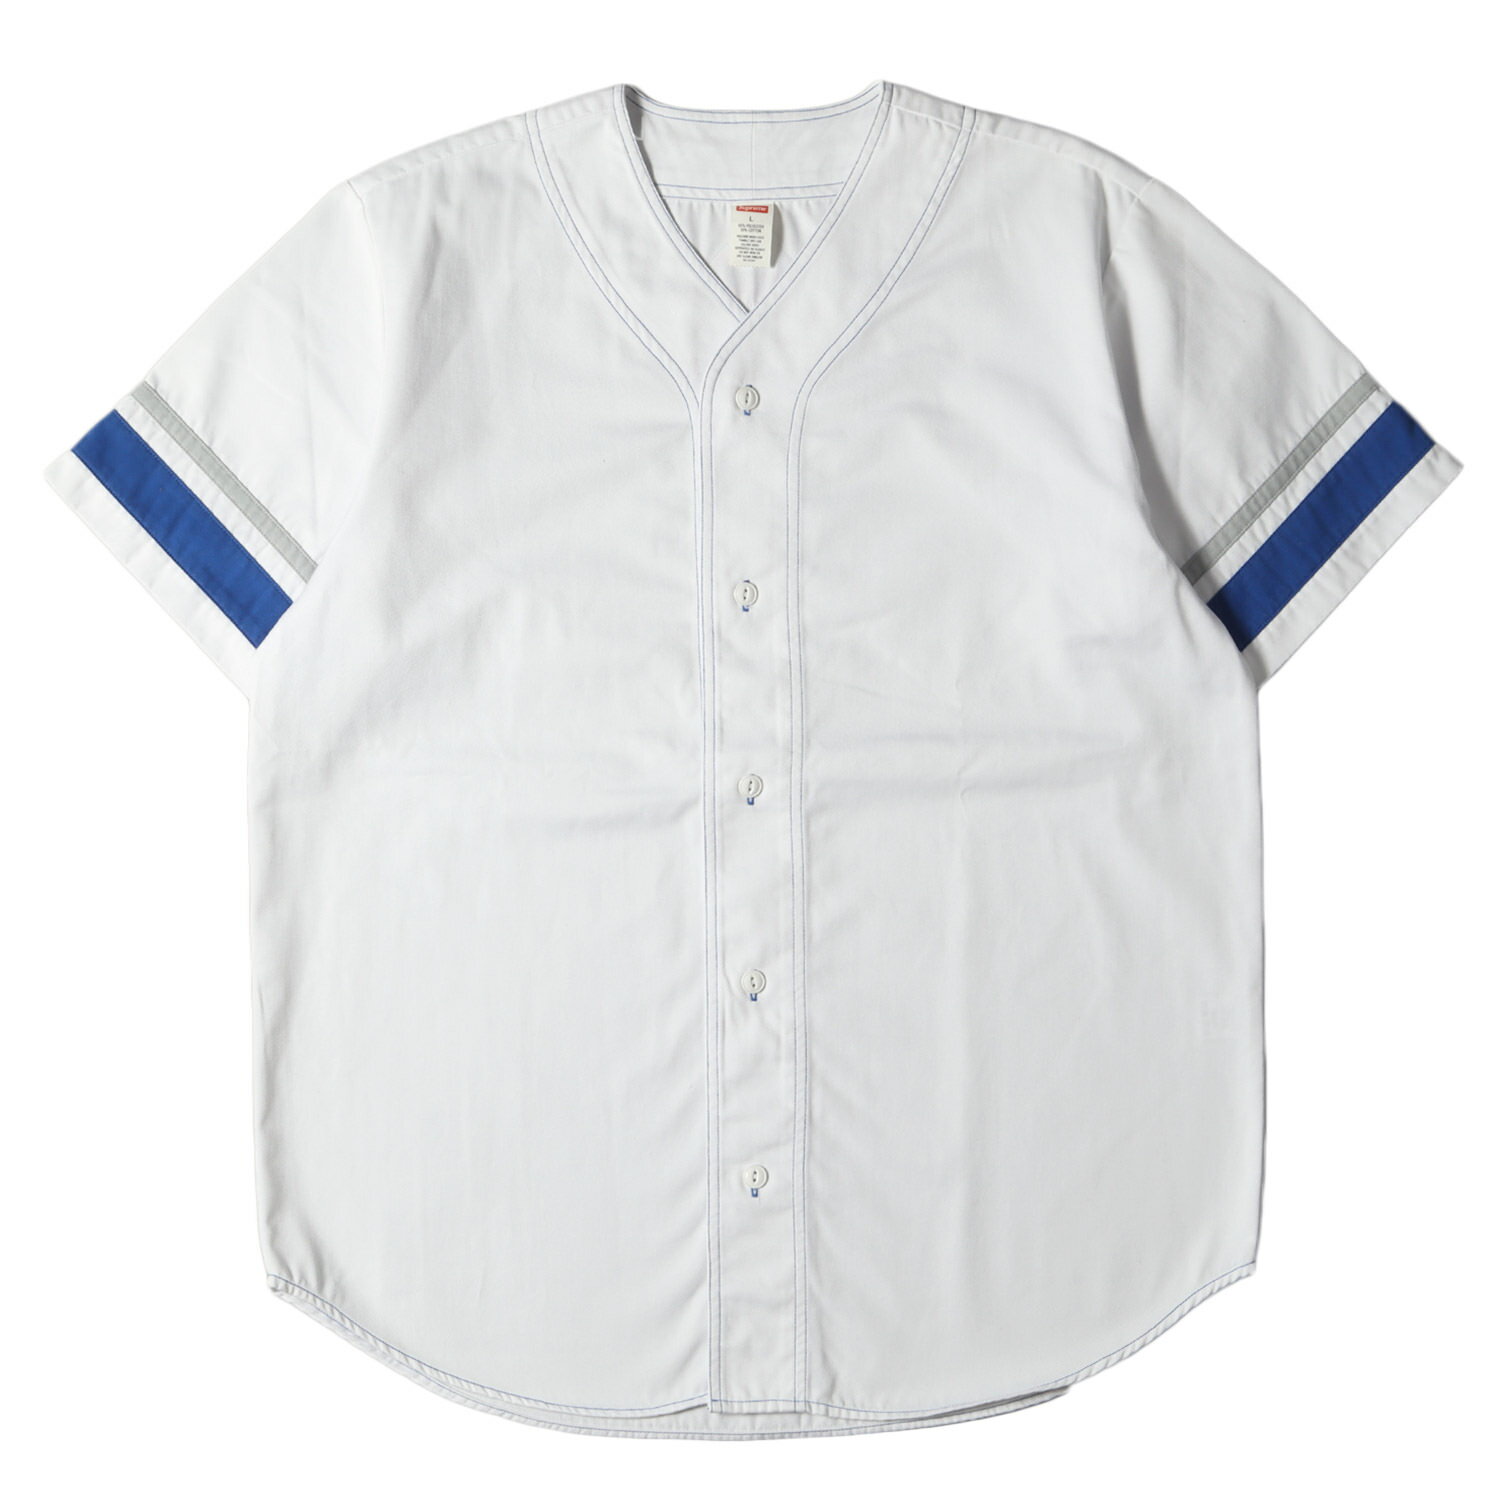 Supreme シュプリーム シャツ サイズ:L 15AW T/Cツイル ベースボールシャツ / Twill Baseball Shirt ホワイト 白 トップス カジュアルシャツ【メンズ】【中古】【K4094】